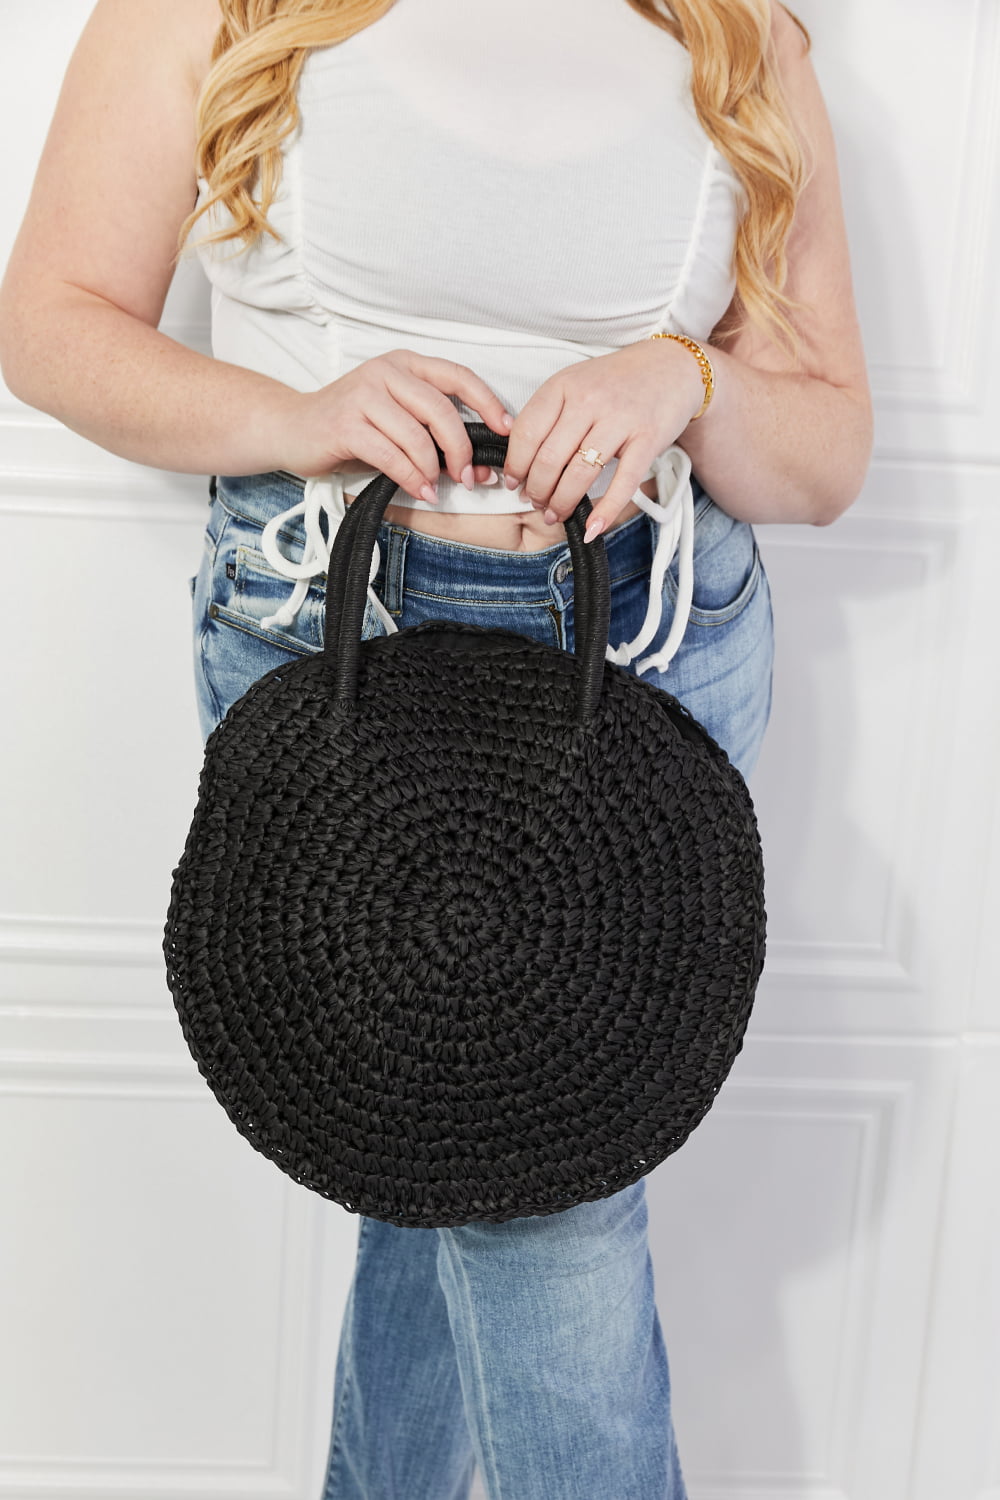 Justin Taylor Beach Date Straw Rattan Handbag in Black - Tigbul's Fashion